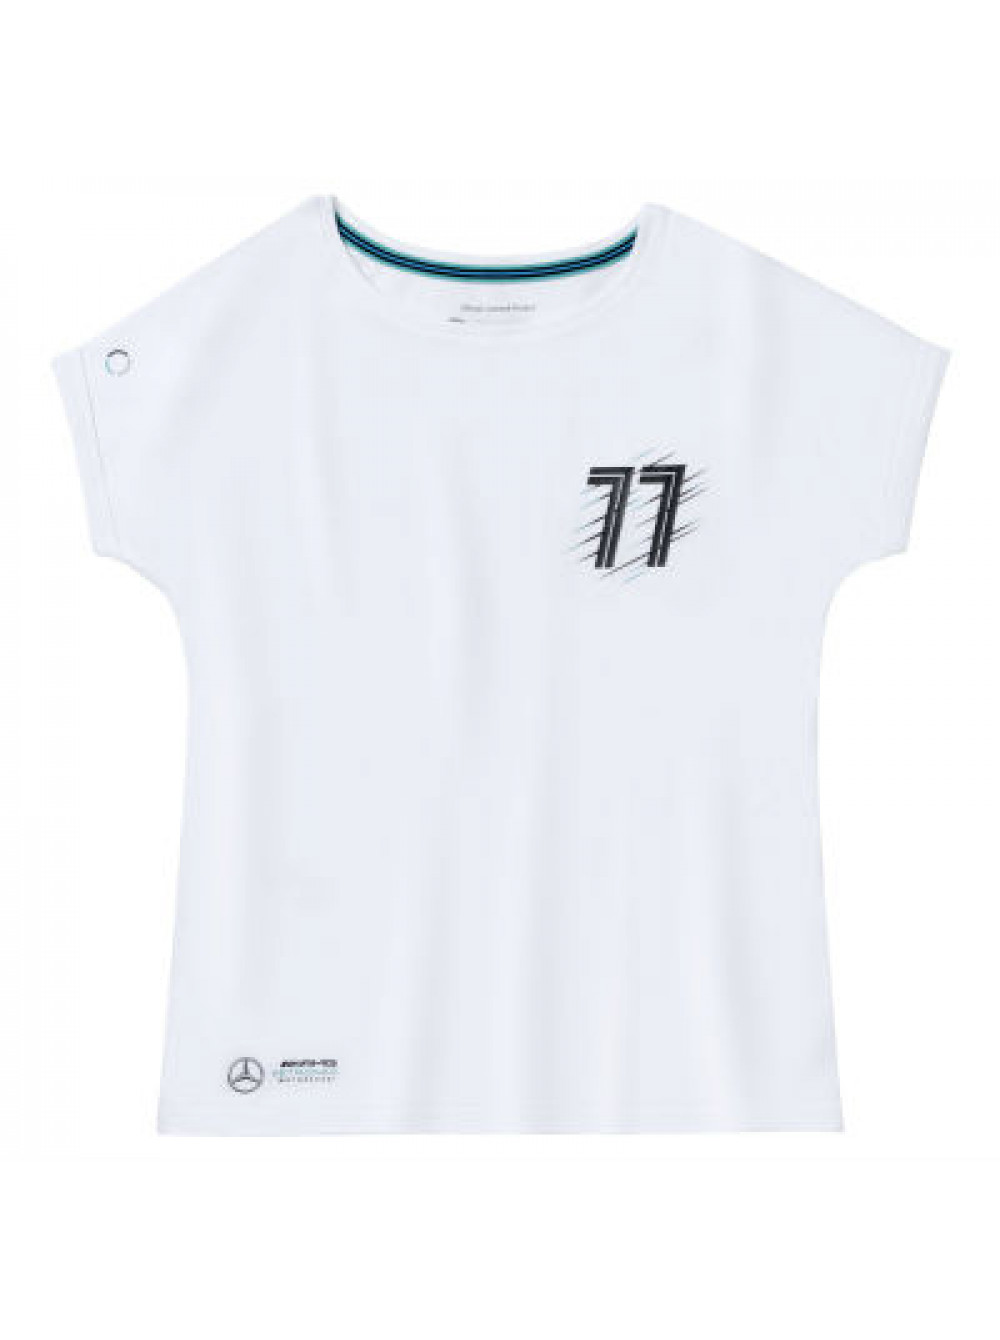 Женская футболка Mercedes AMG Petronas Women's T-shirt, Valtteri Bottas, White M